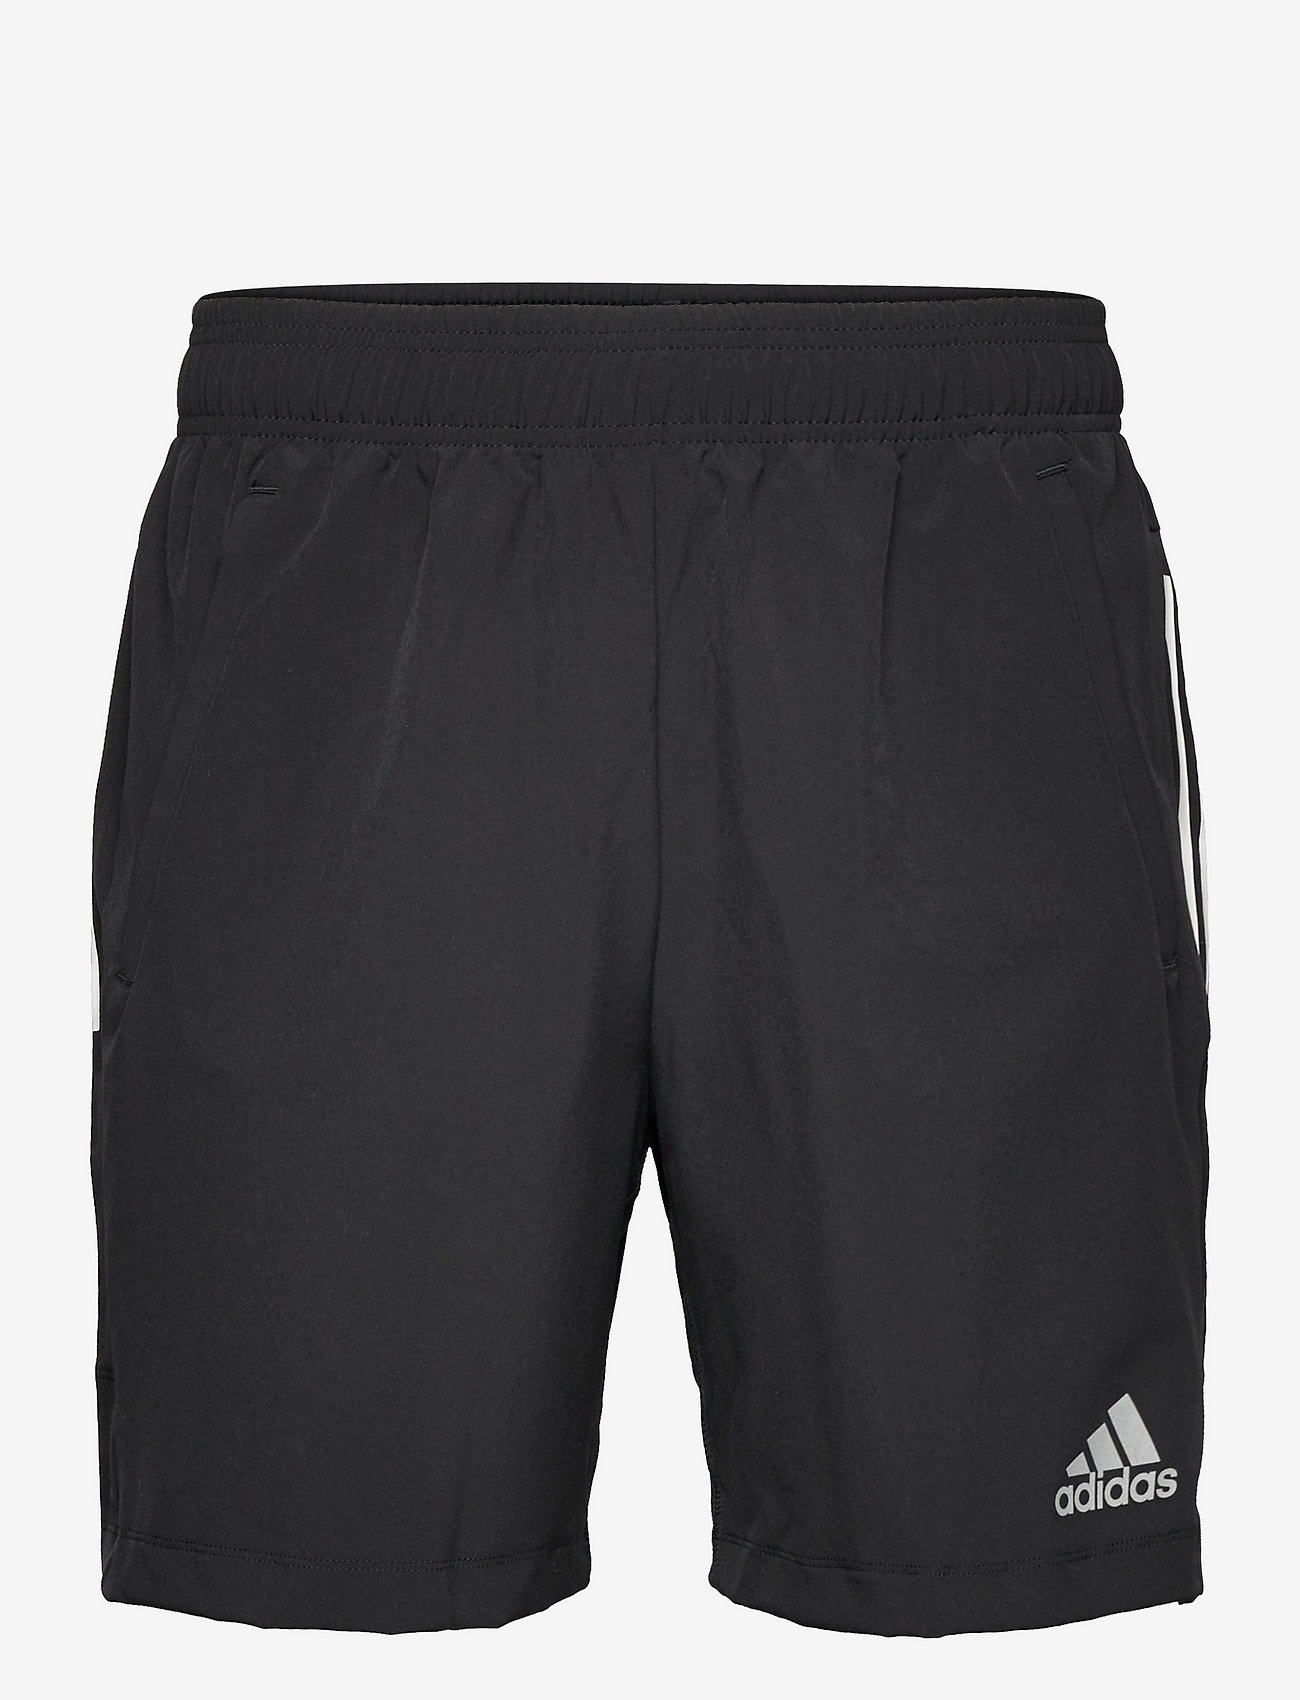 adidas Performance Shorts - Sports shorts | Boozt.com